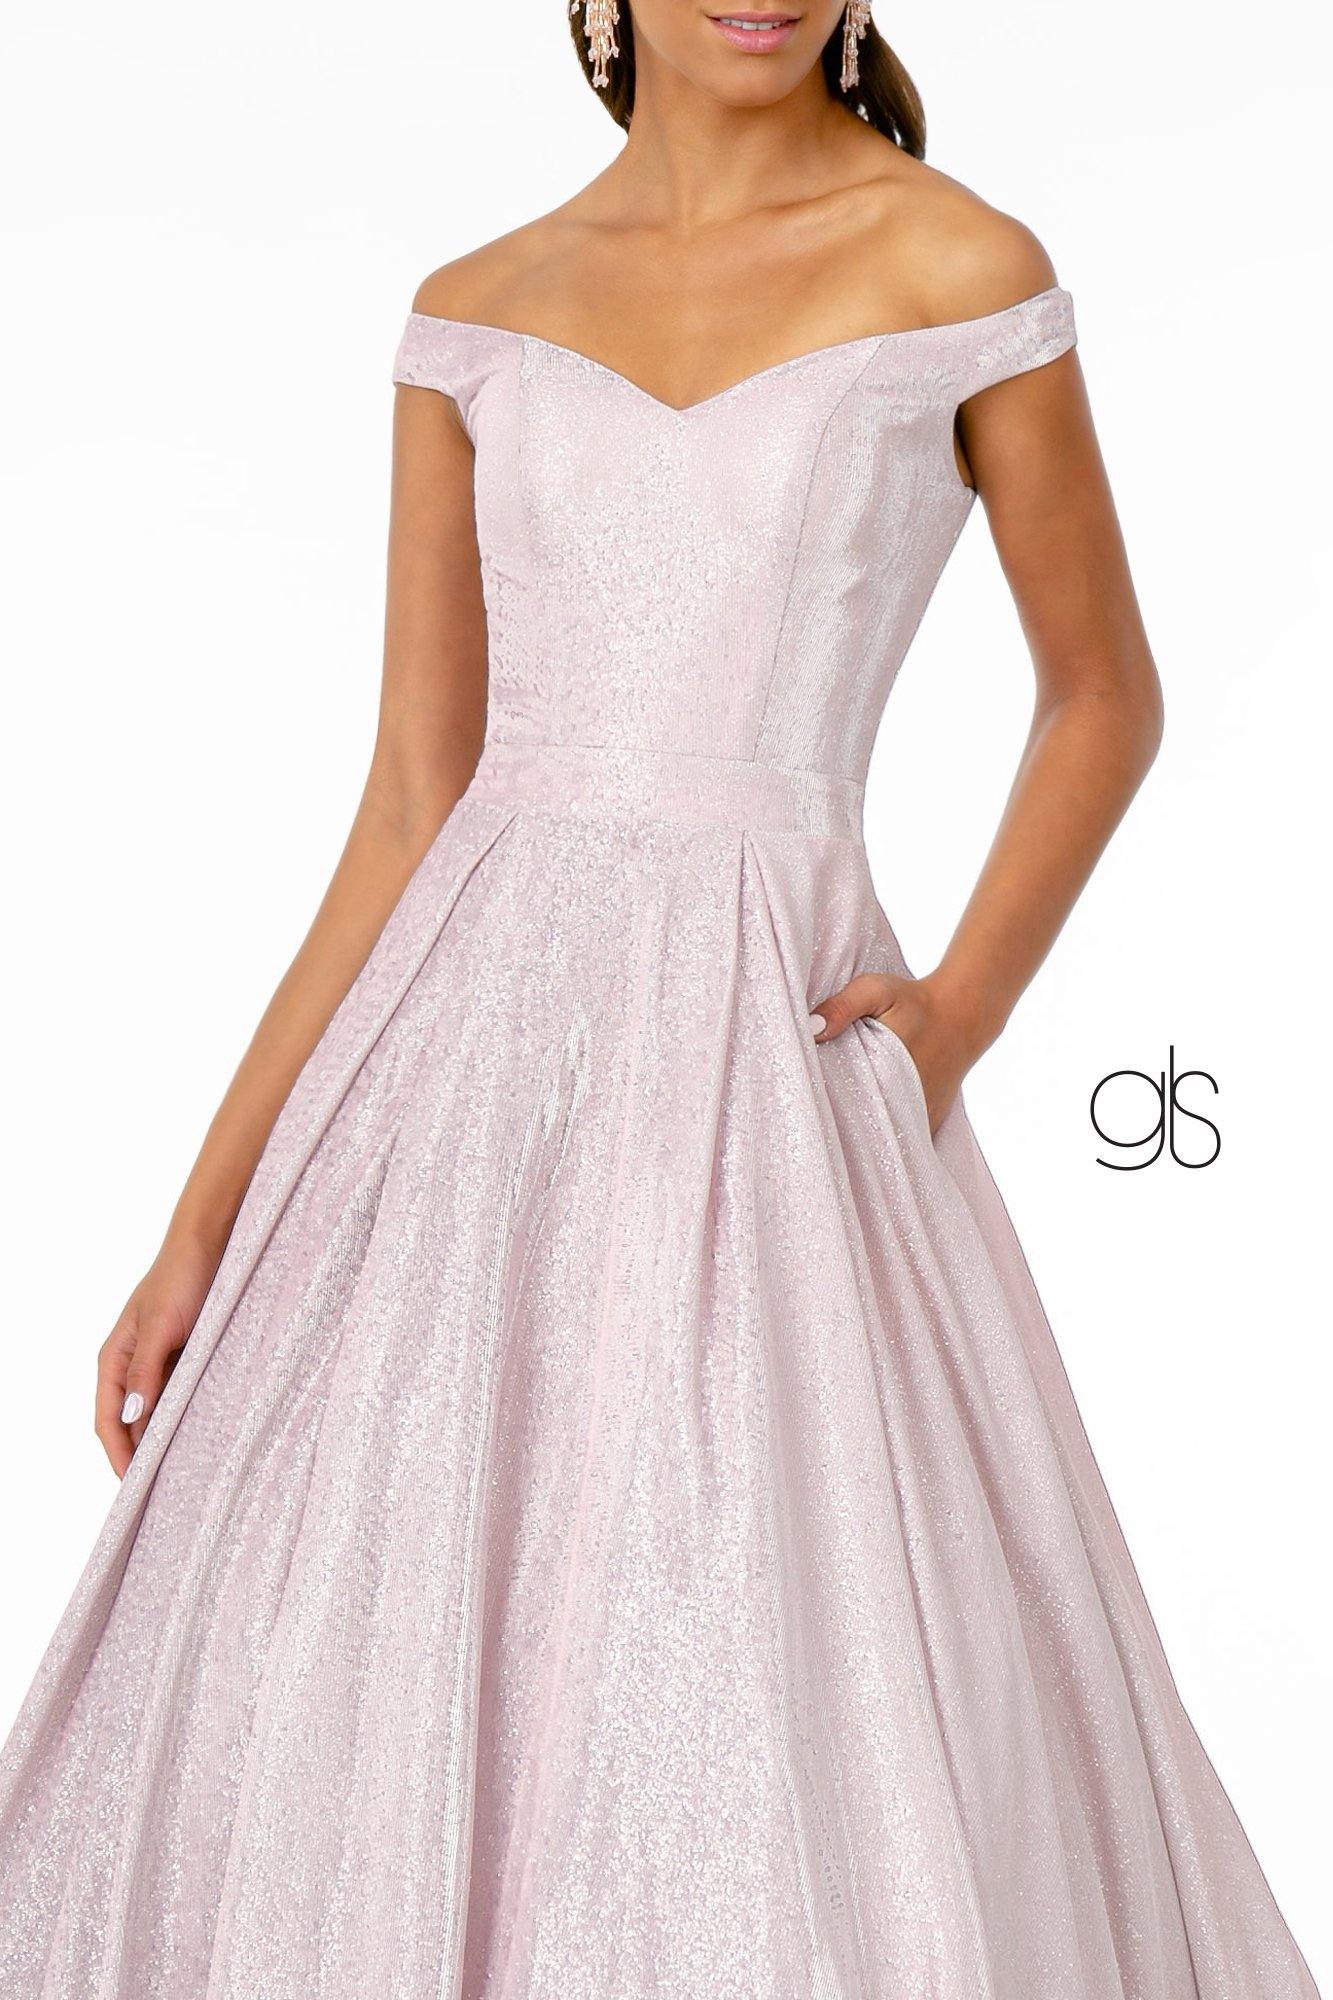 Cut-Away Shoulder Prom Dress Ball Gown - The Dress Outlet Elizabeth K